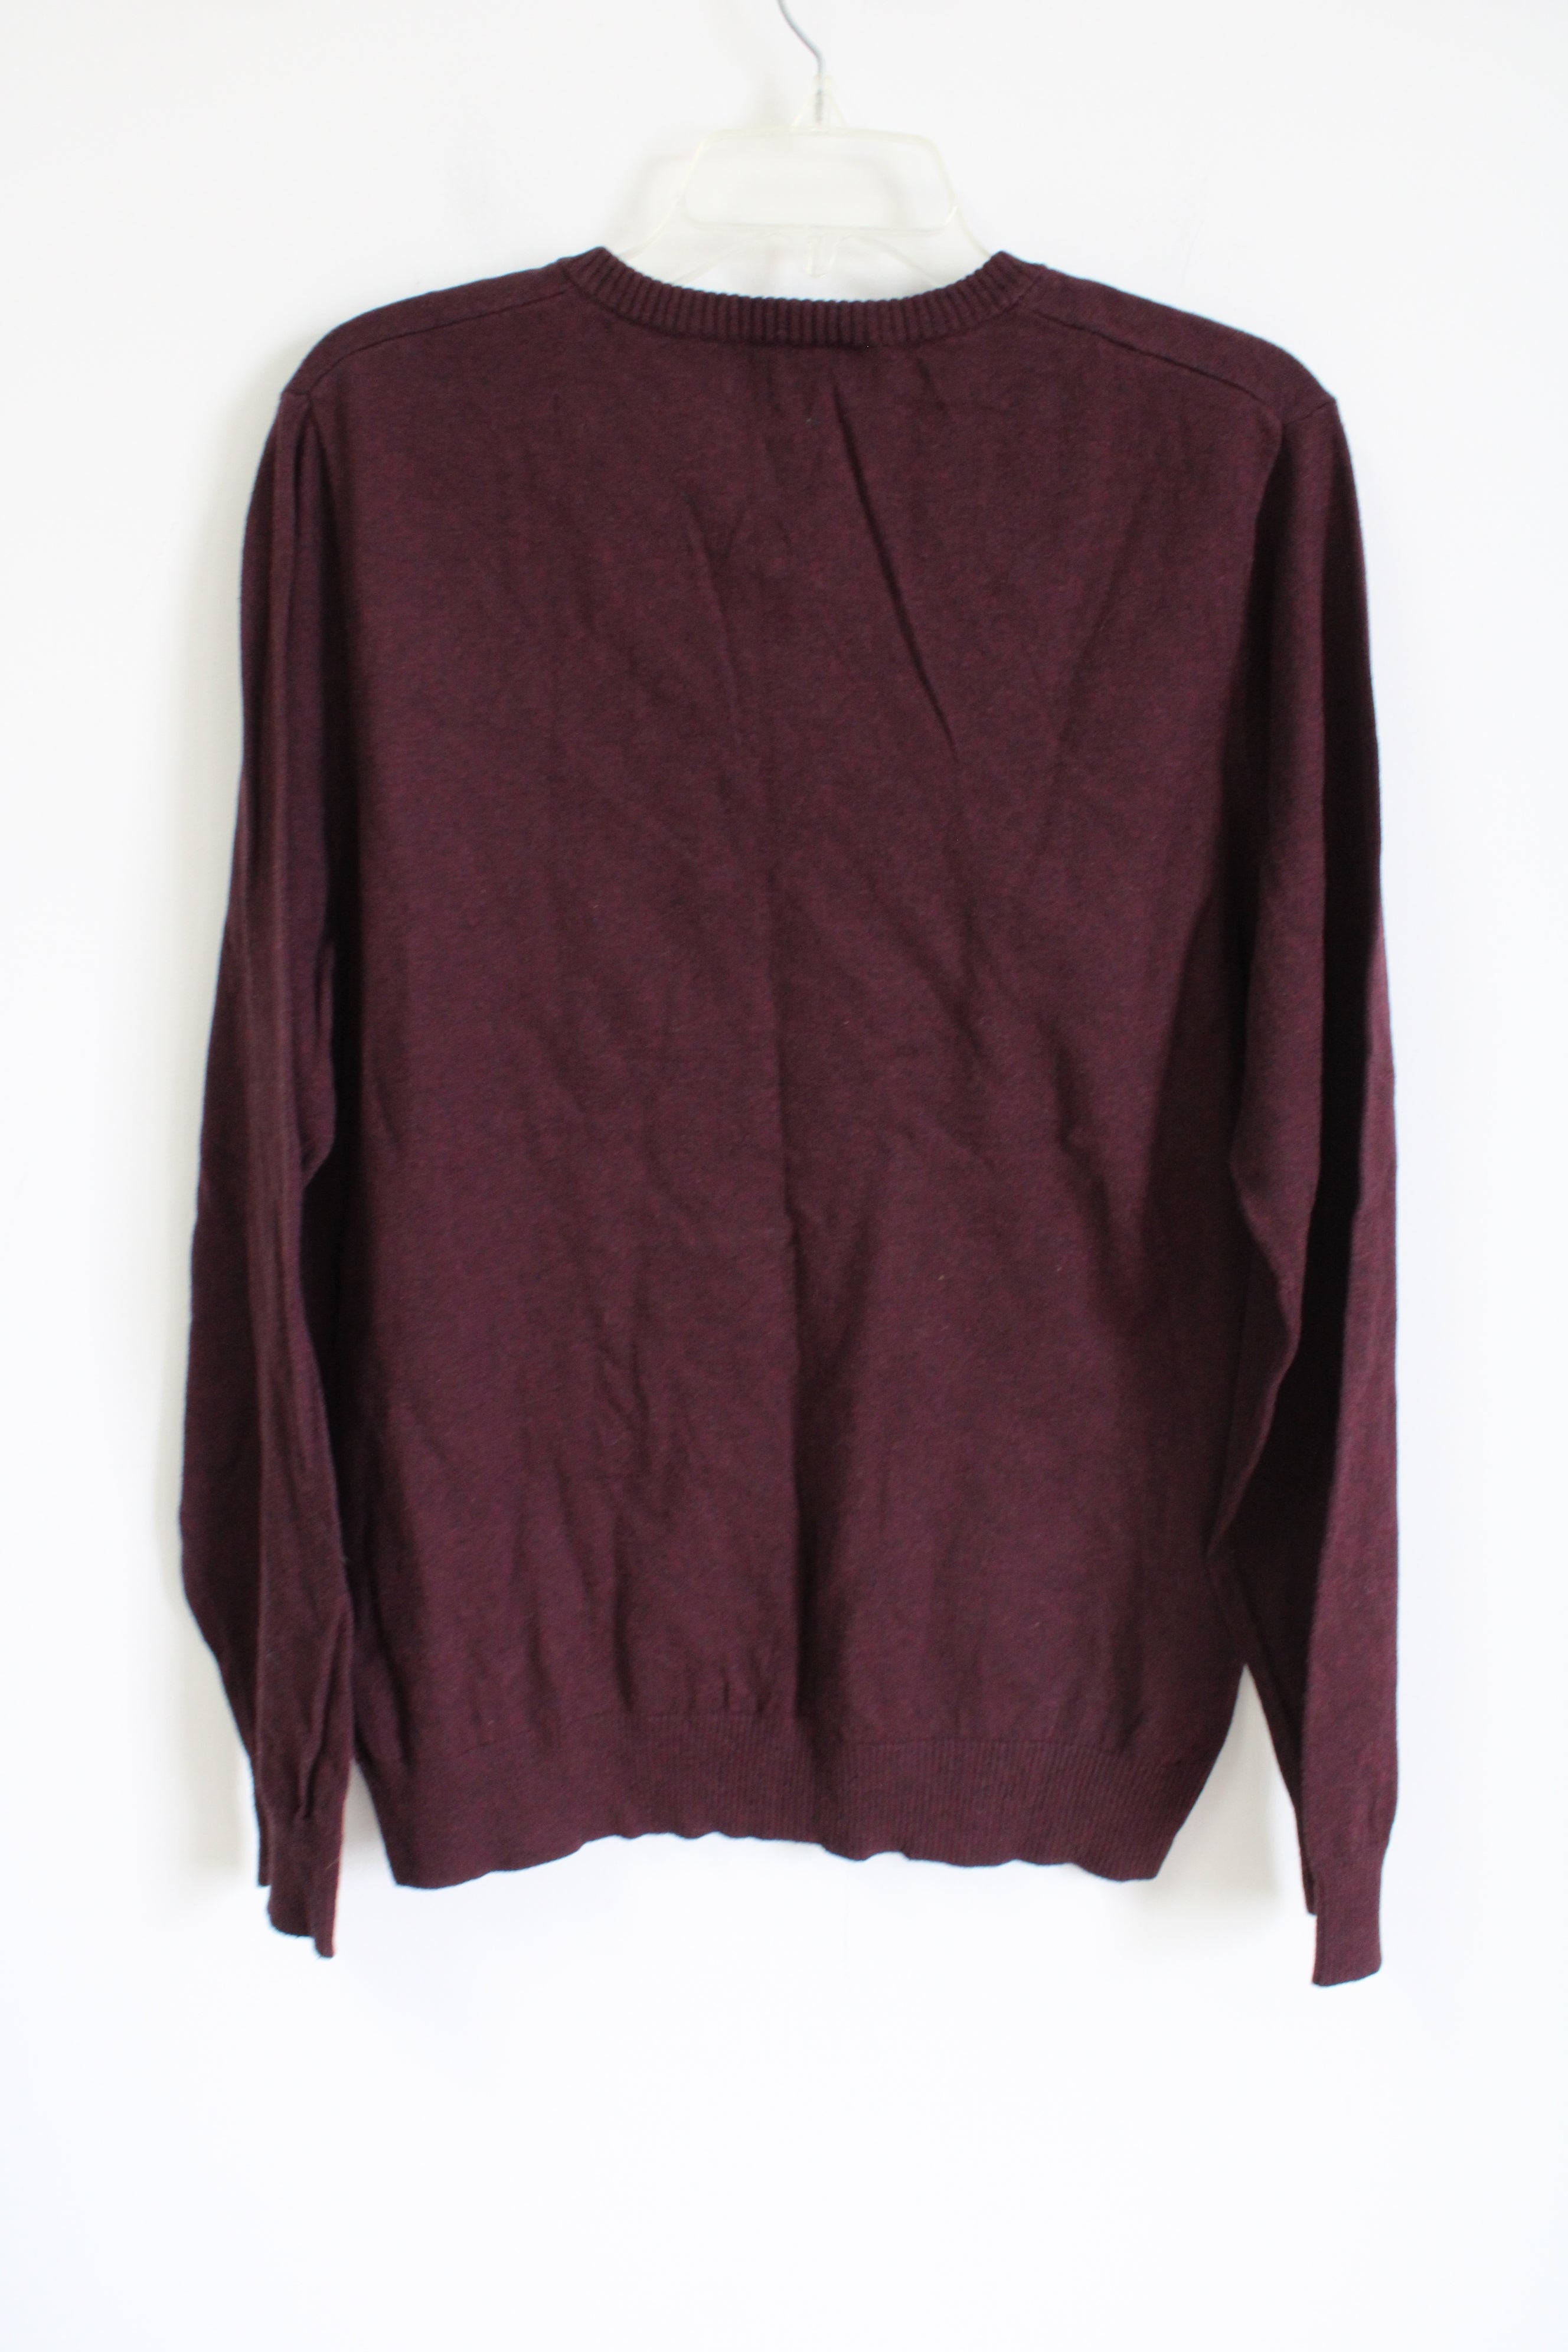 Sonoma Burgundy Knit Sweater | M